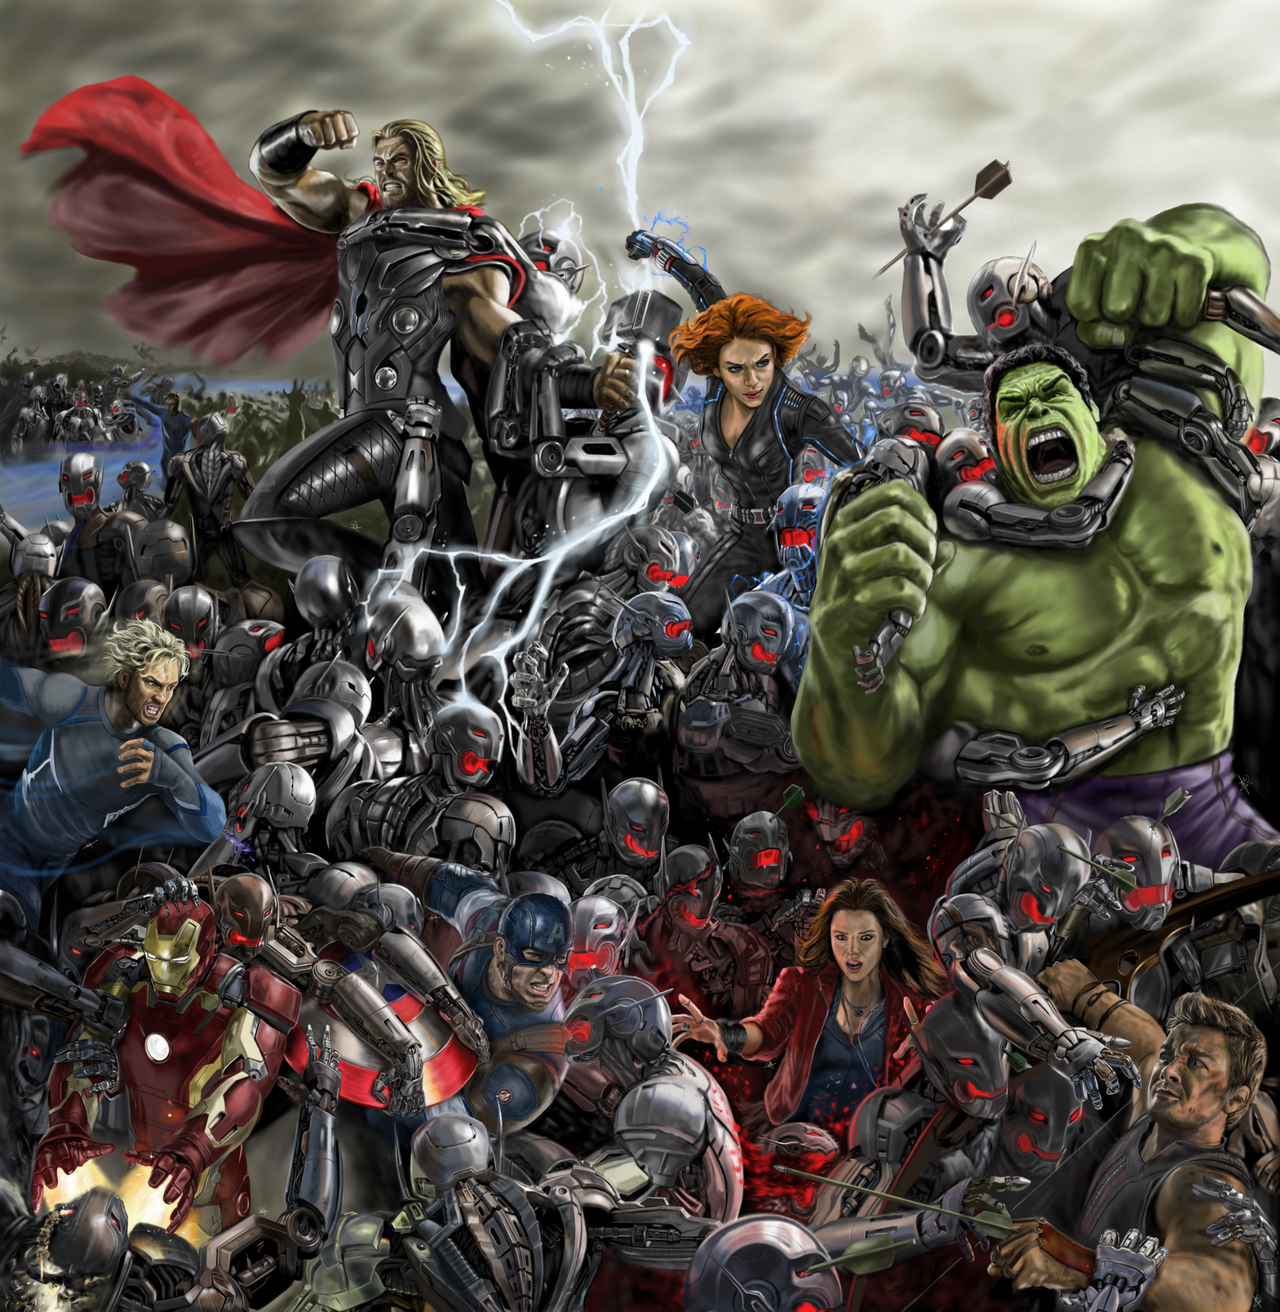 Avengers age of ultron